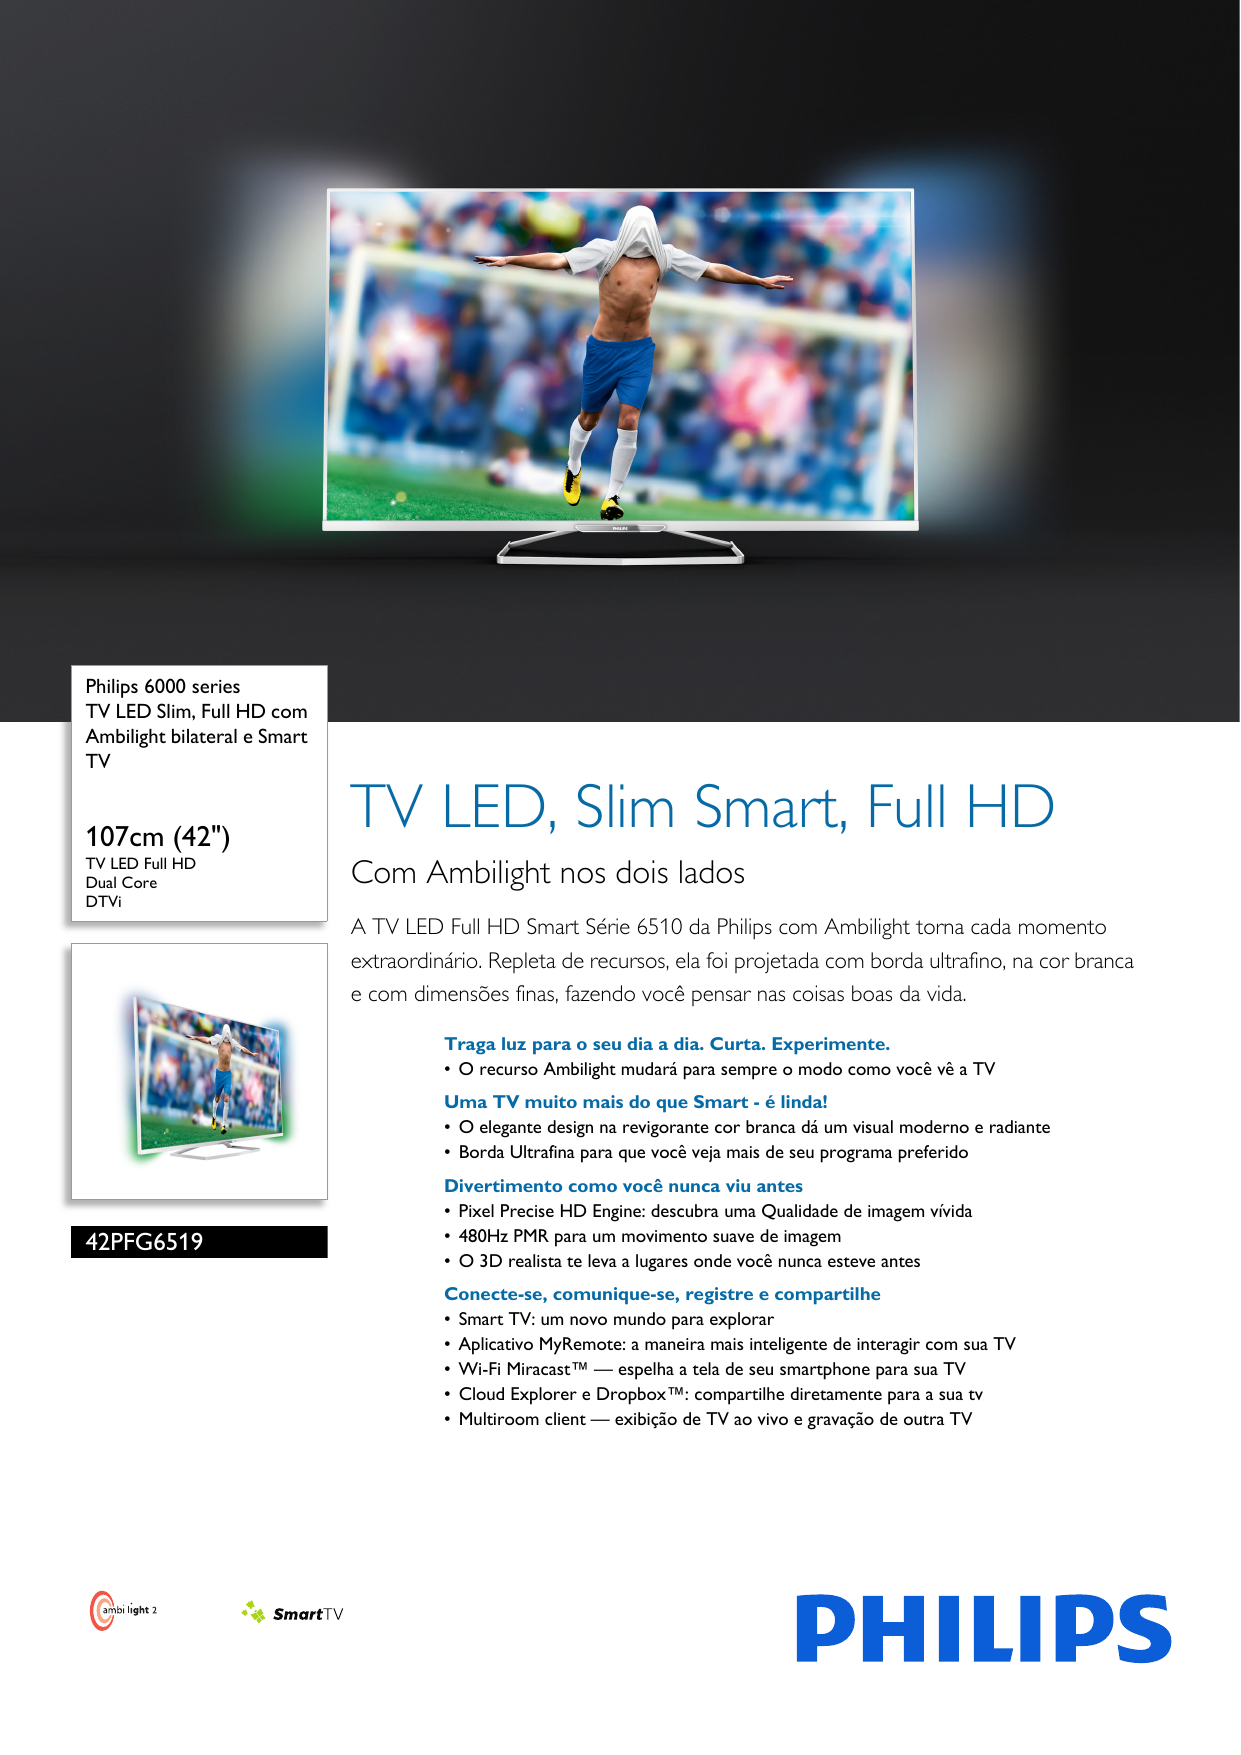 Page 1 of 3 - Philips 42PFG6519/78 TV LED Slim, Full HD Com Ambilight Bilateral E Smart User Manual Folheto 42pfg6519 78 Pss Brpbr